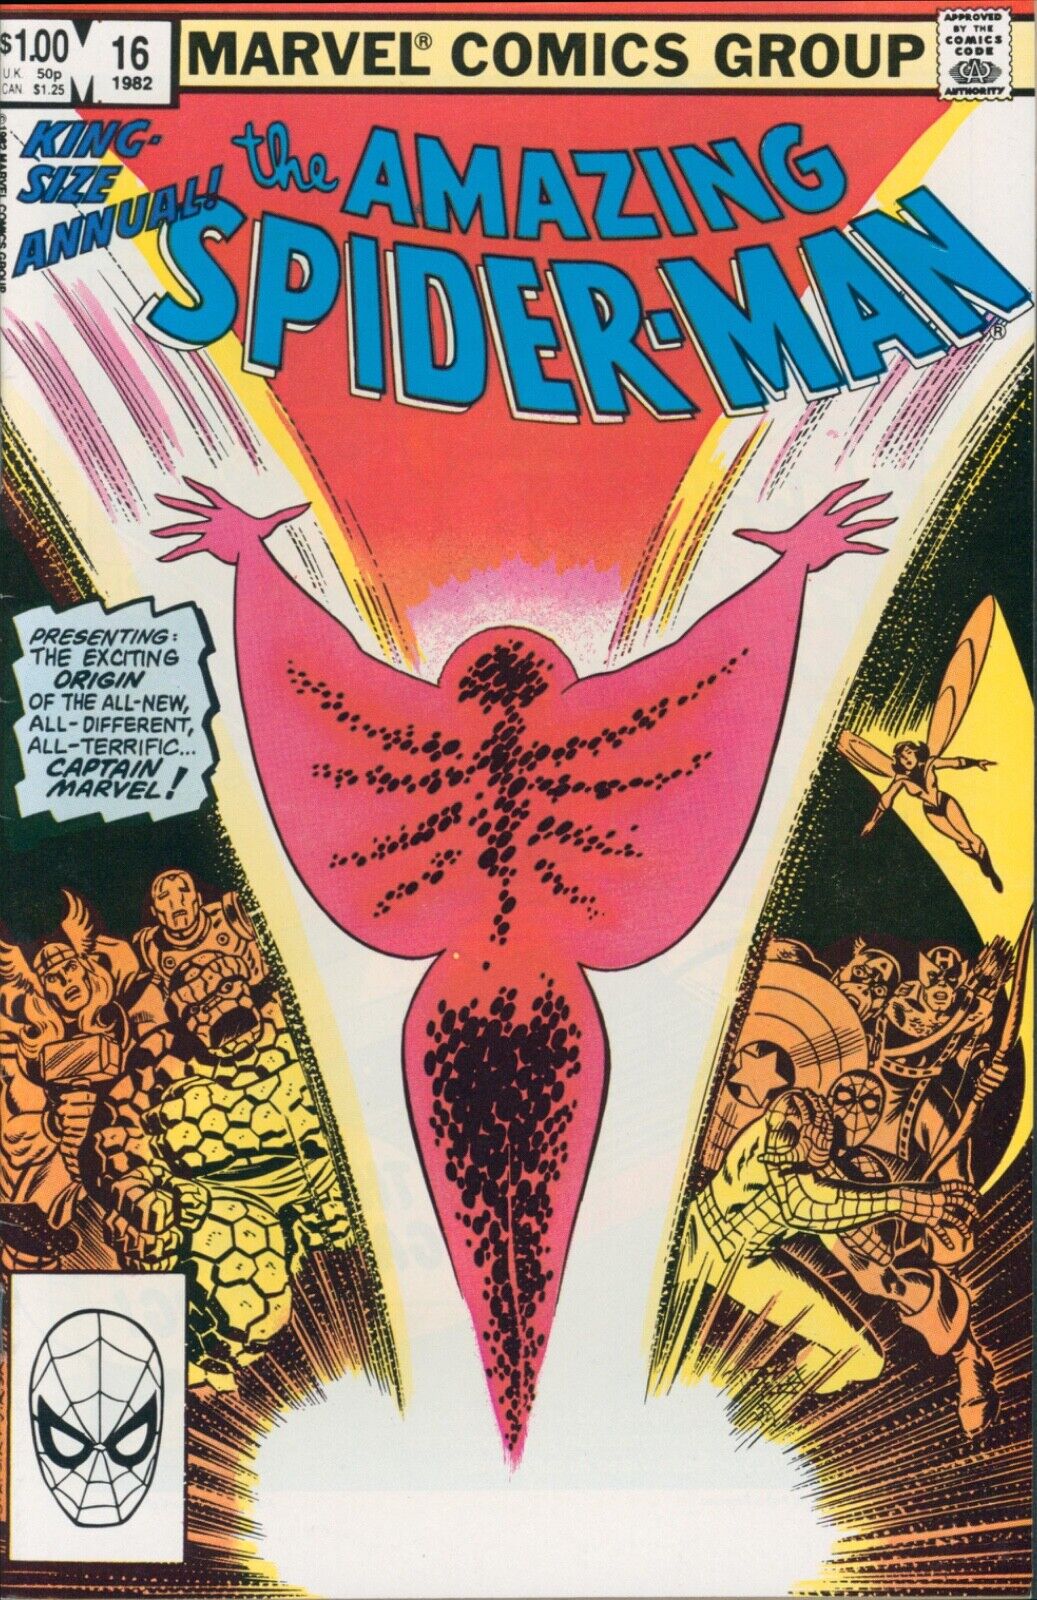 THE AMAZING SPIDER-MAN ANNUAL #16 ~ MARVEL COMICS 1982 ~ VF